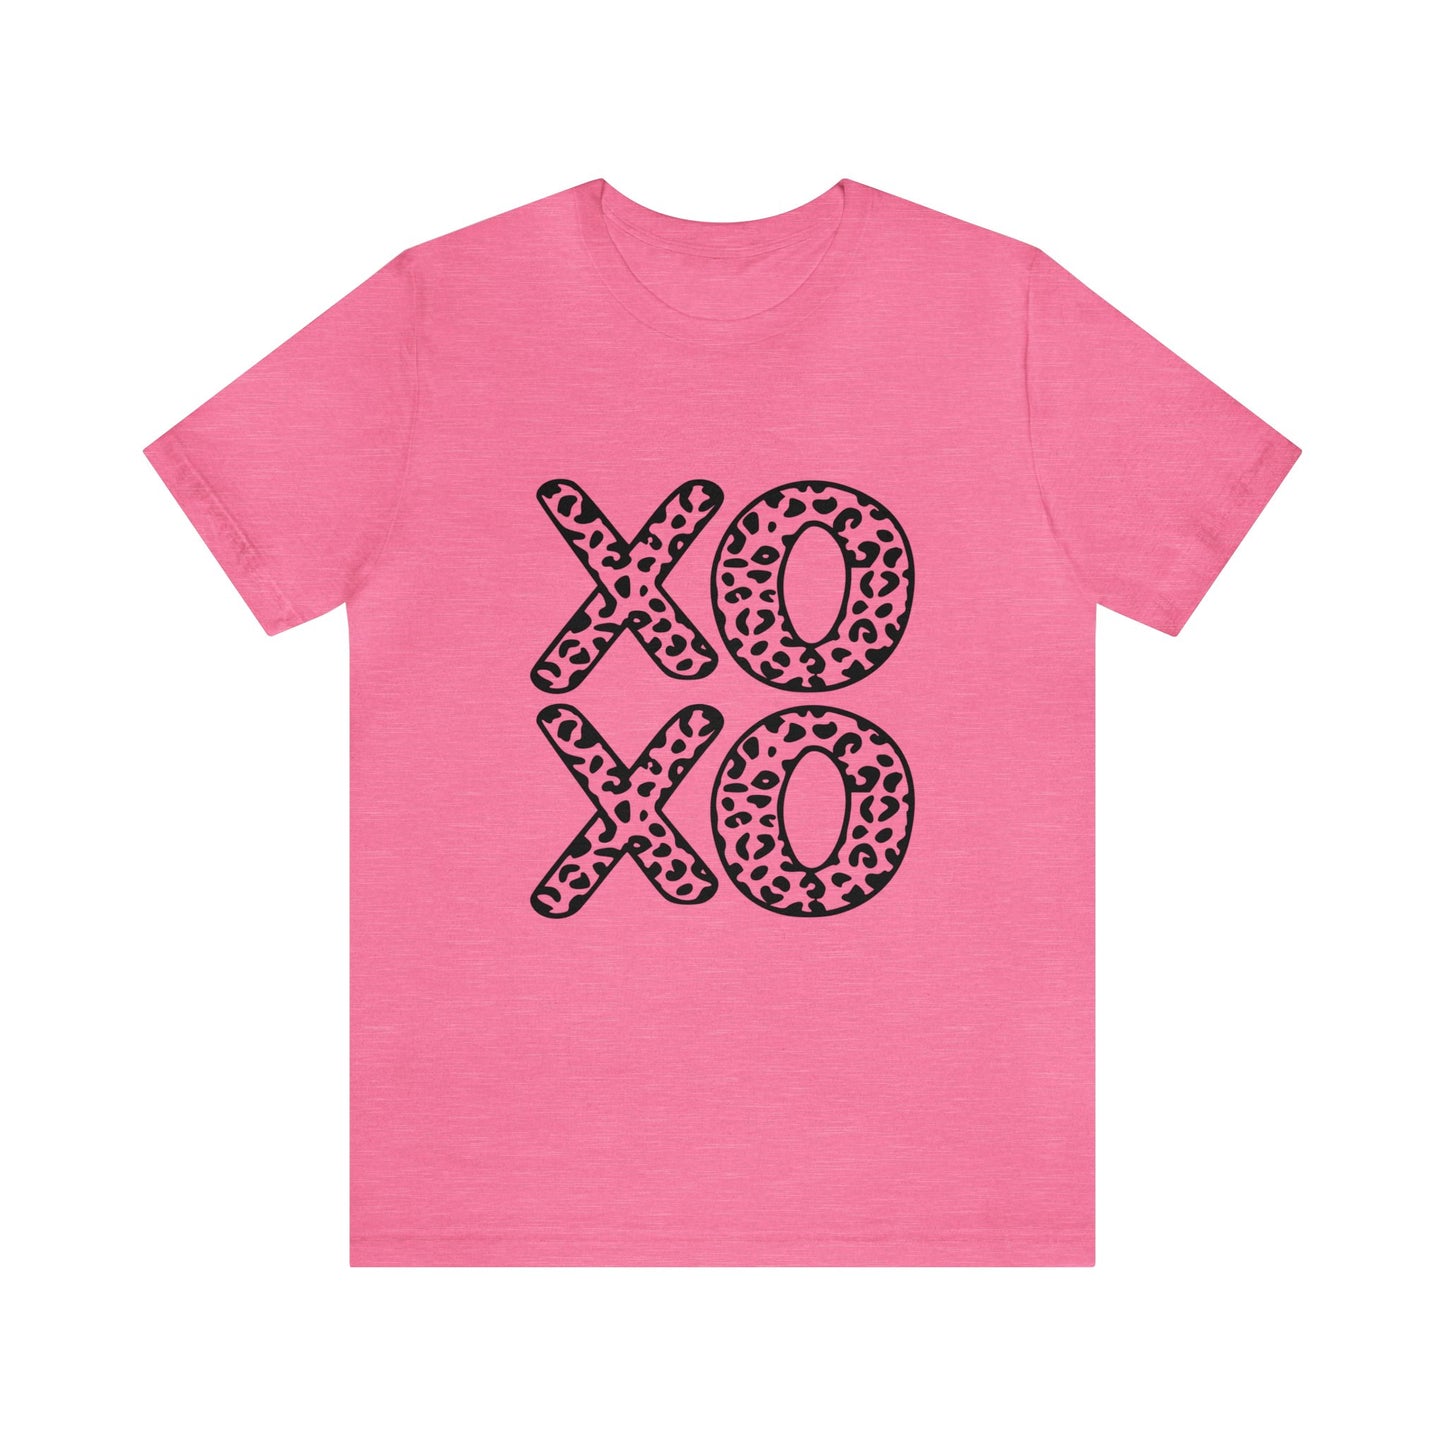 XOXO Women's Tshirt